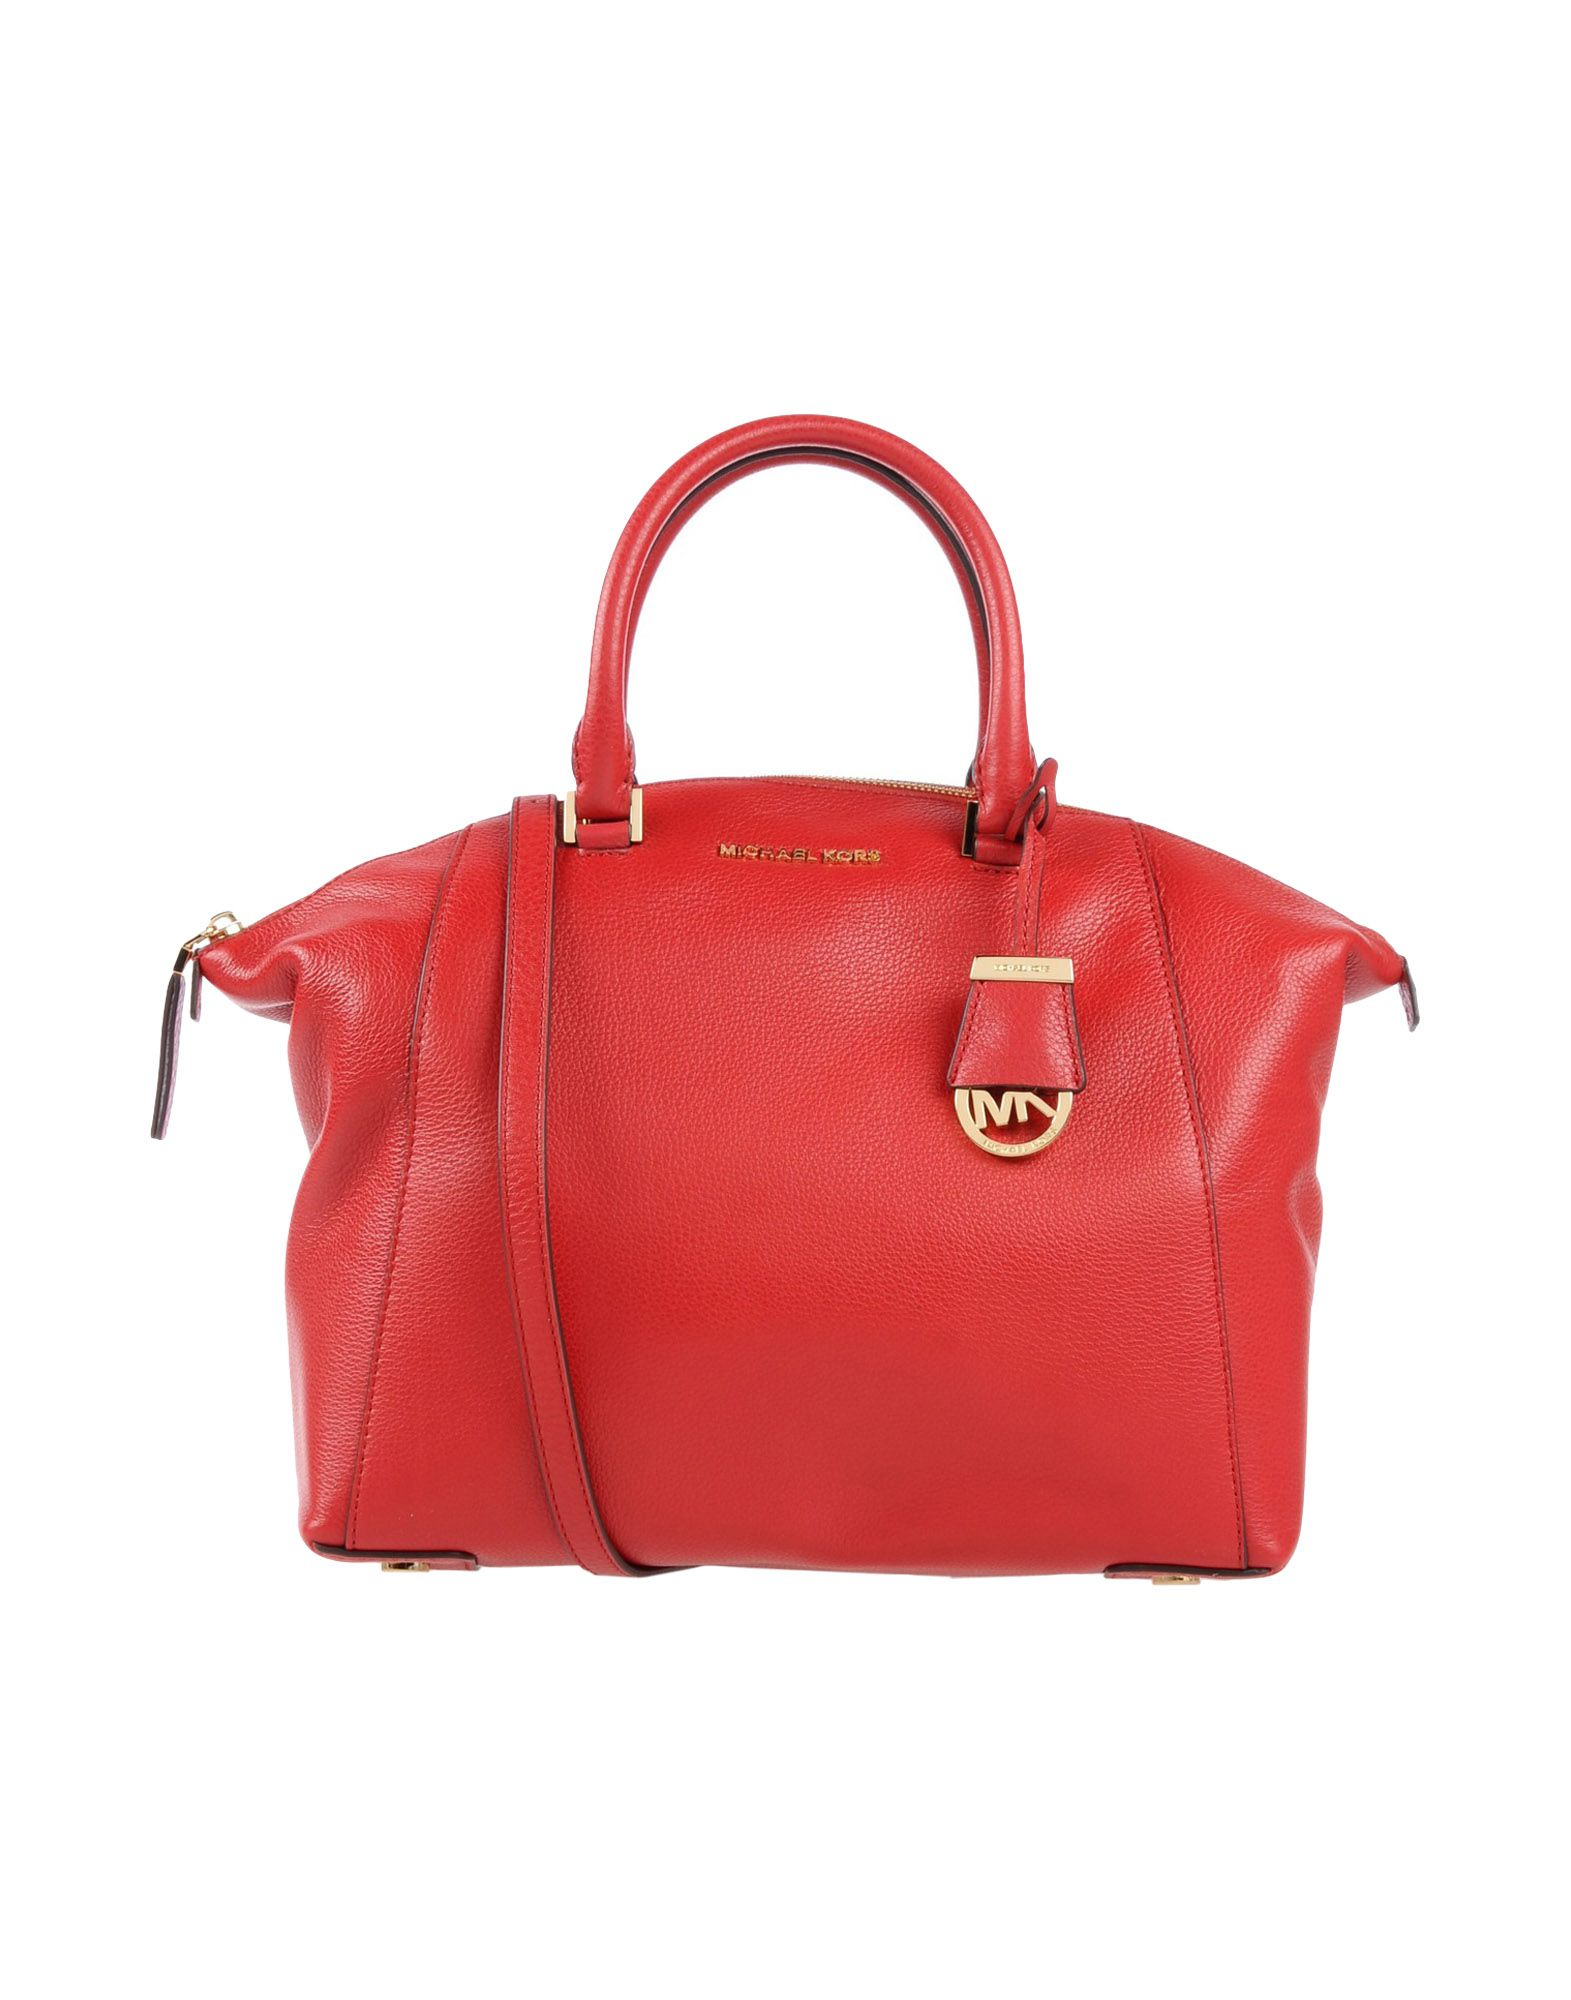 MICHAEL Michael Kors Handbag in Red - Lyst